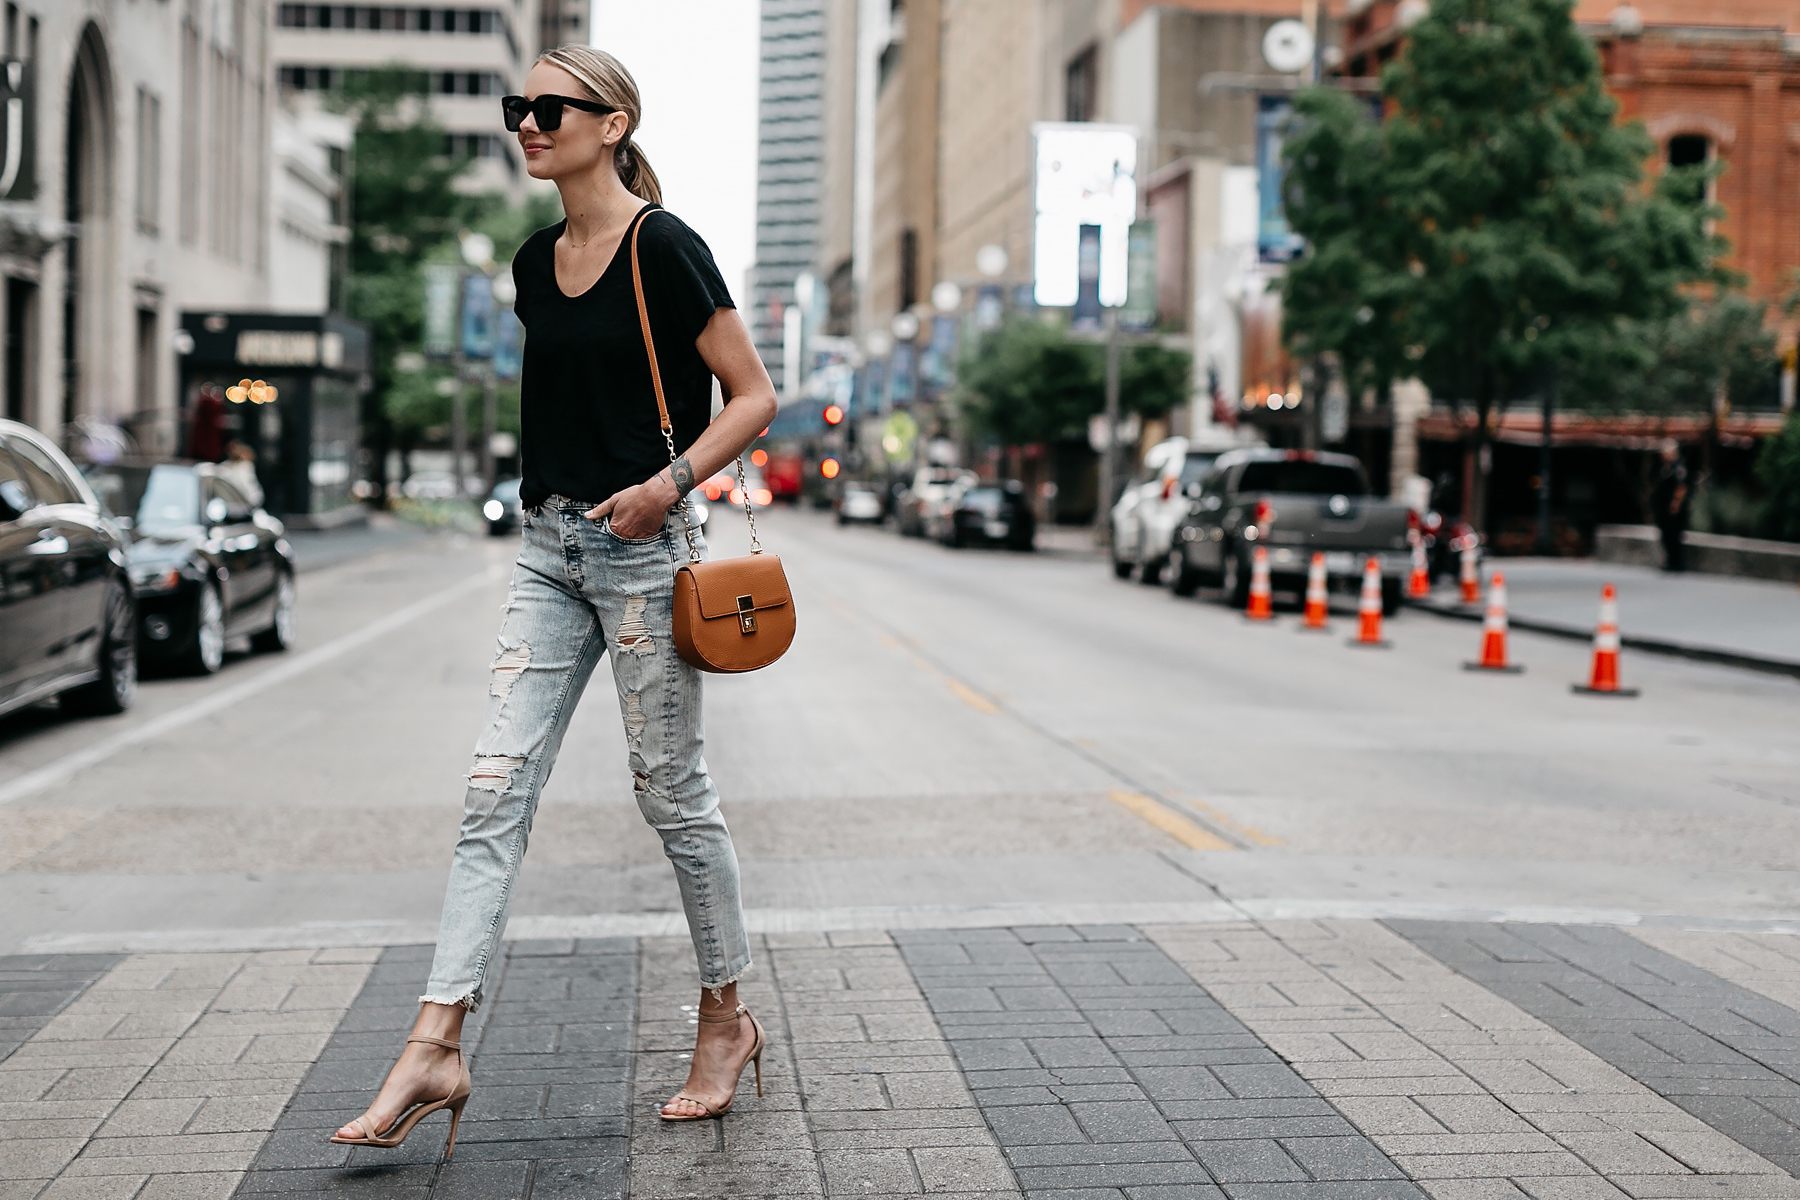 Blonde Woman Wearing Express Black Tshirt Express Ripped Jeans Tan Ankle Strap Heeled Sandals Tan Handbag Fashion Jackson Dallas Blogger Fashion Blogger Street Style